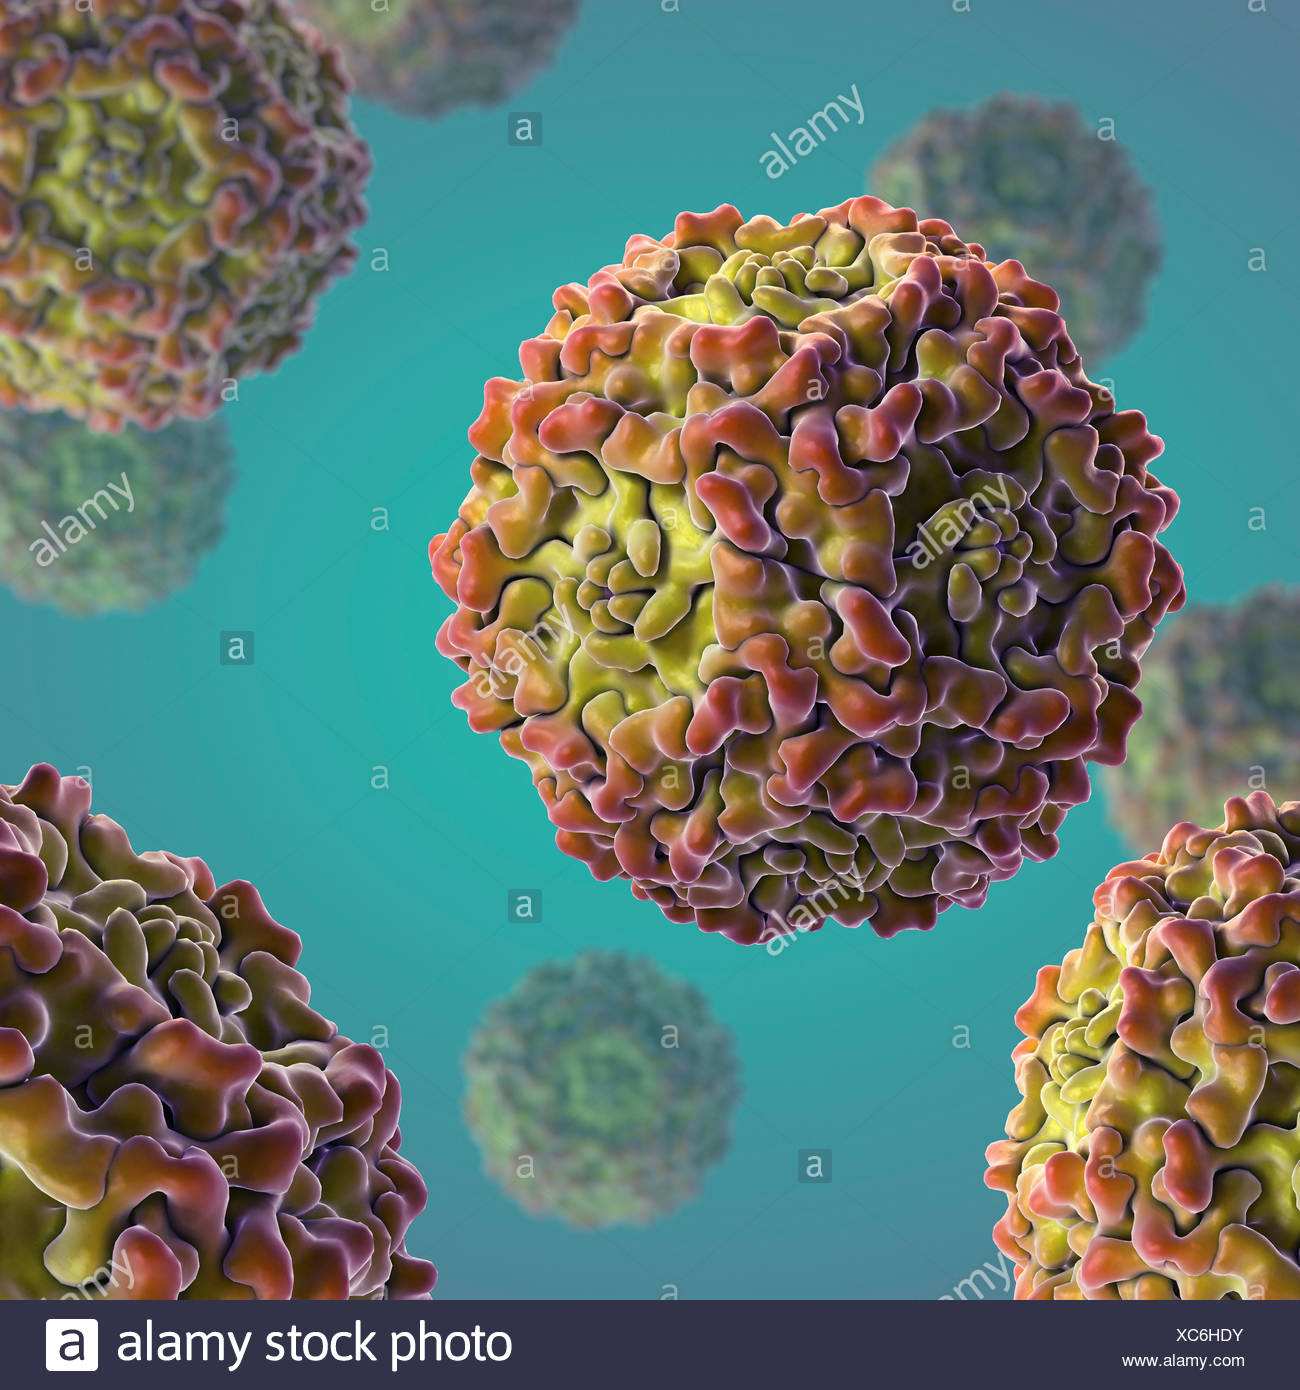 Parvovirus B19 Virus High Resolution Stock Photography And Images Alamy